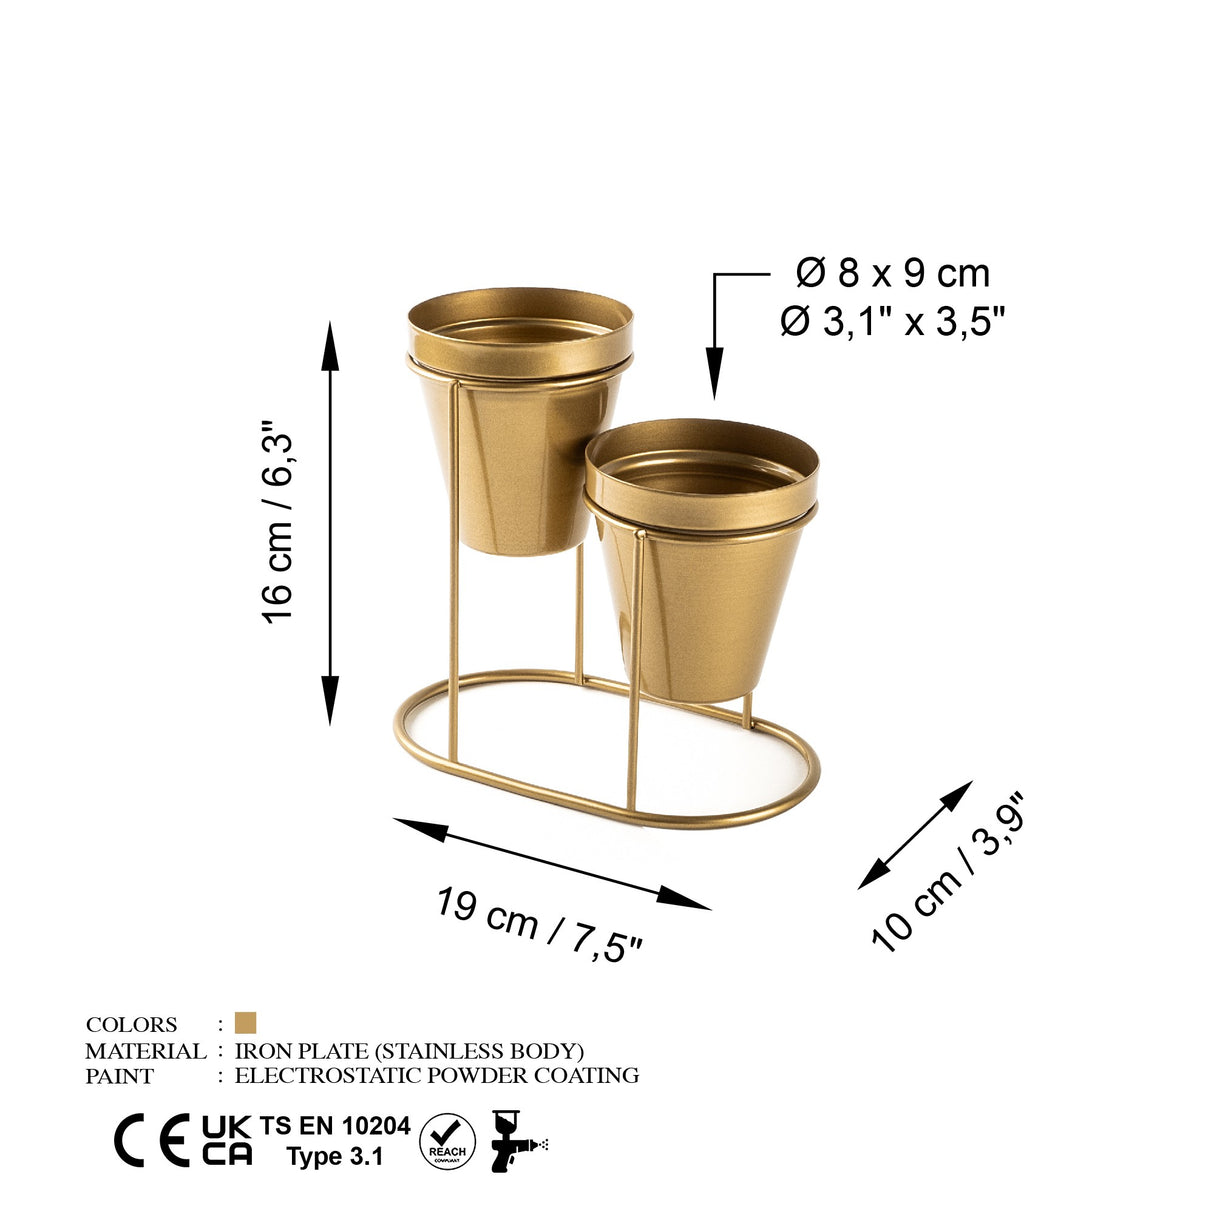 Accesoriu metalic decorativ
 GED-015, Aur, 10x16x19 cm